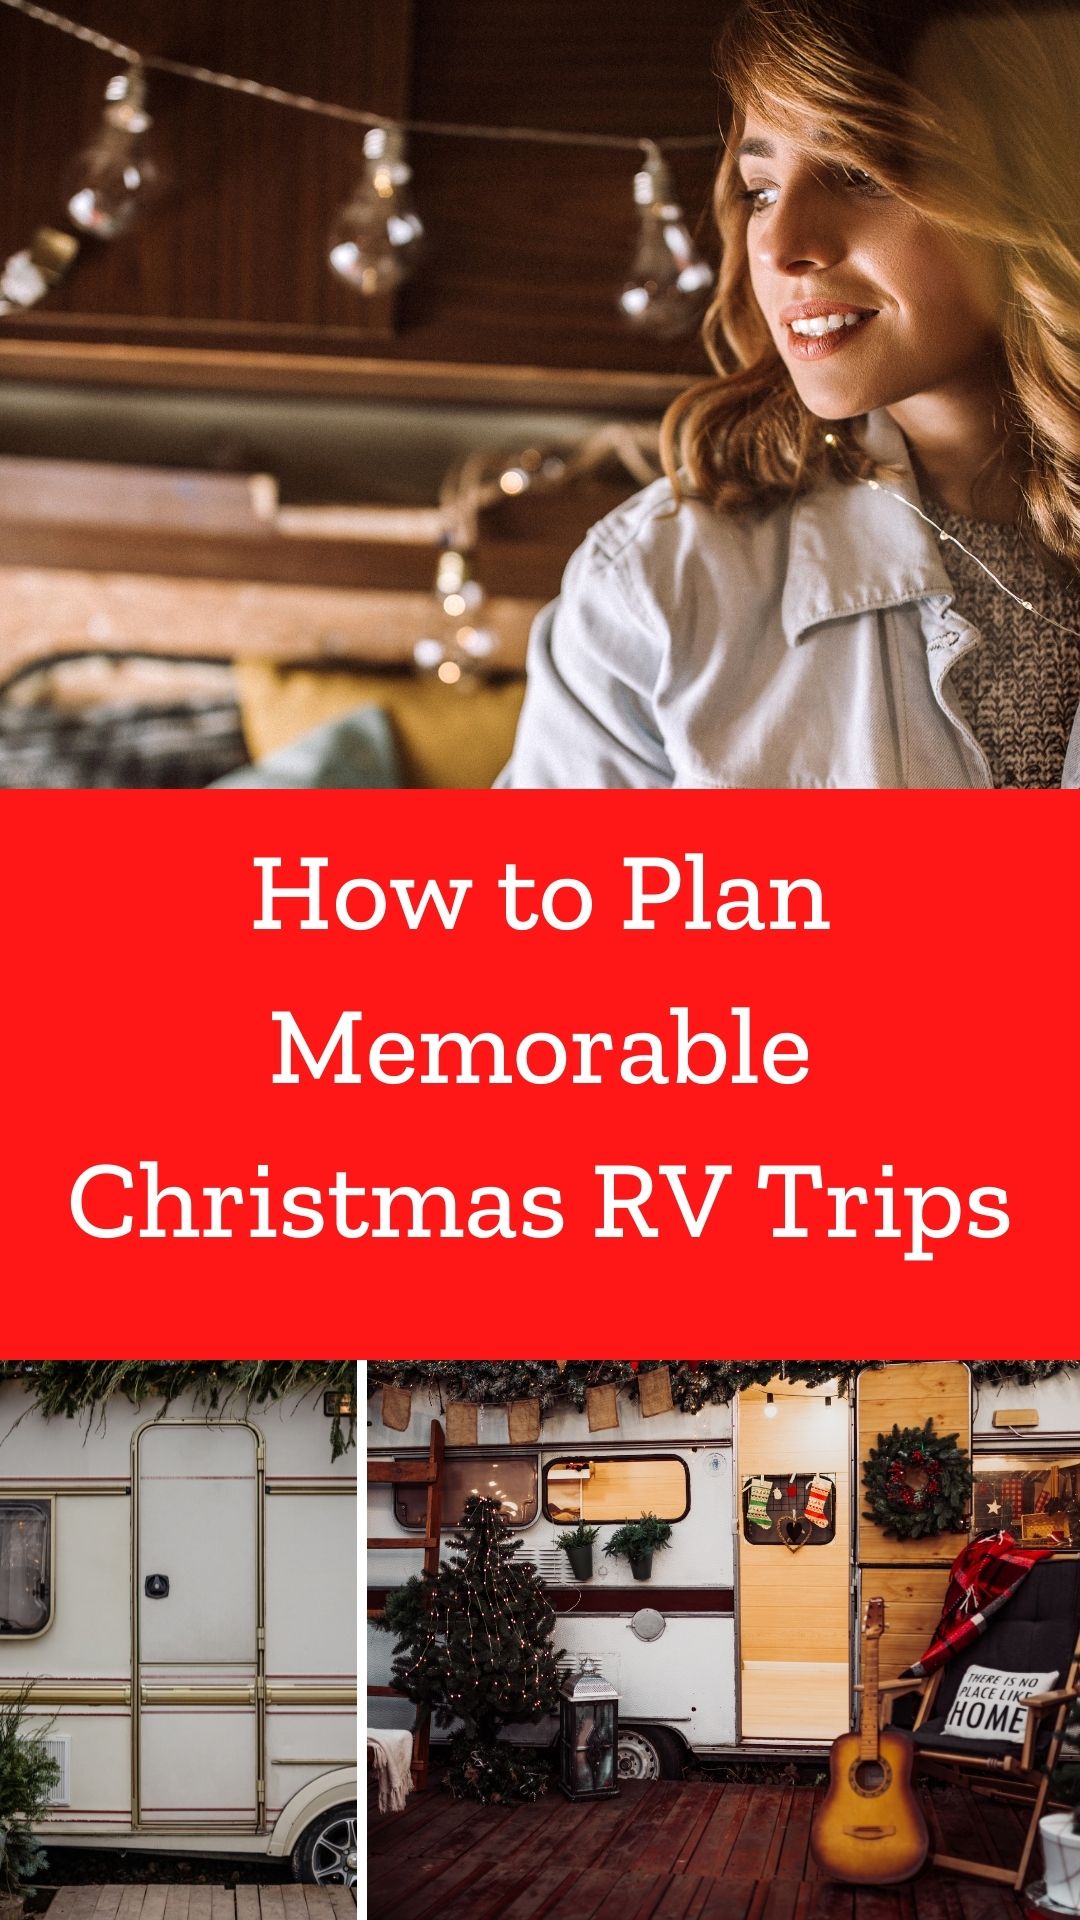 Make memories by planning festive RV Christmas trips this holiday season